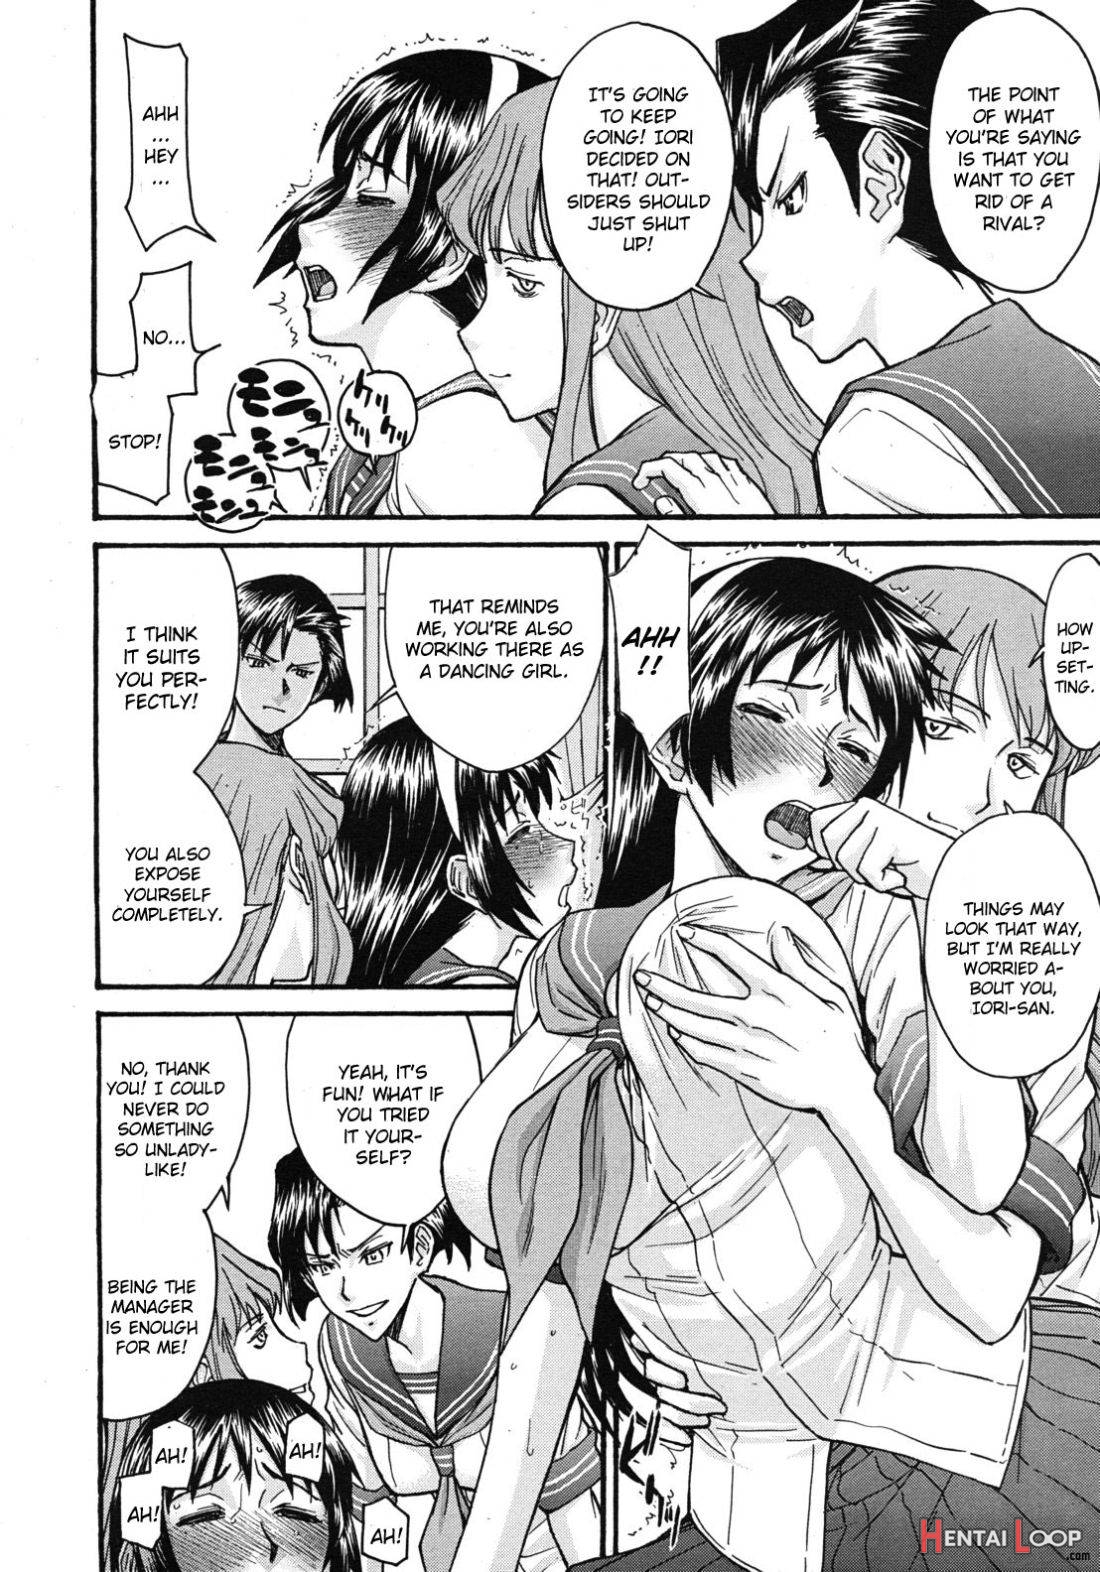 Sailor Fuku to Strip page 4